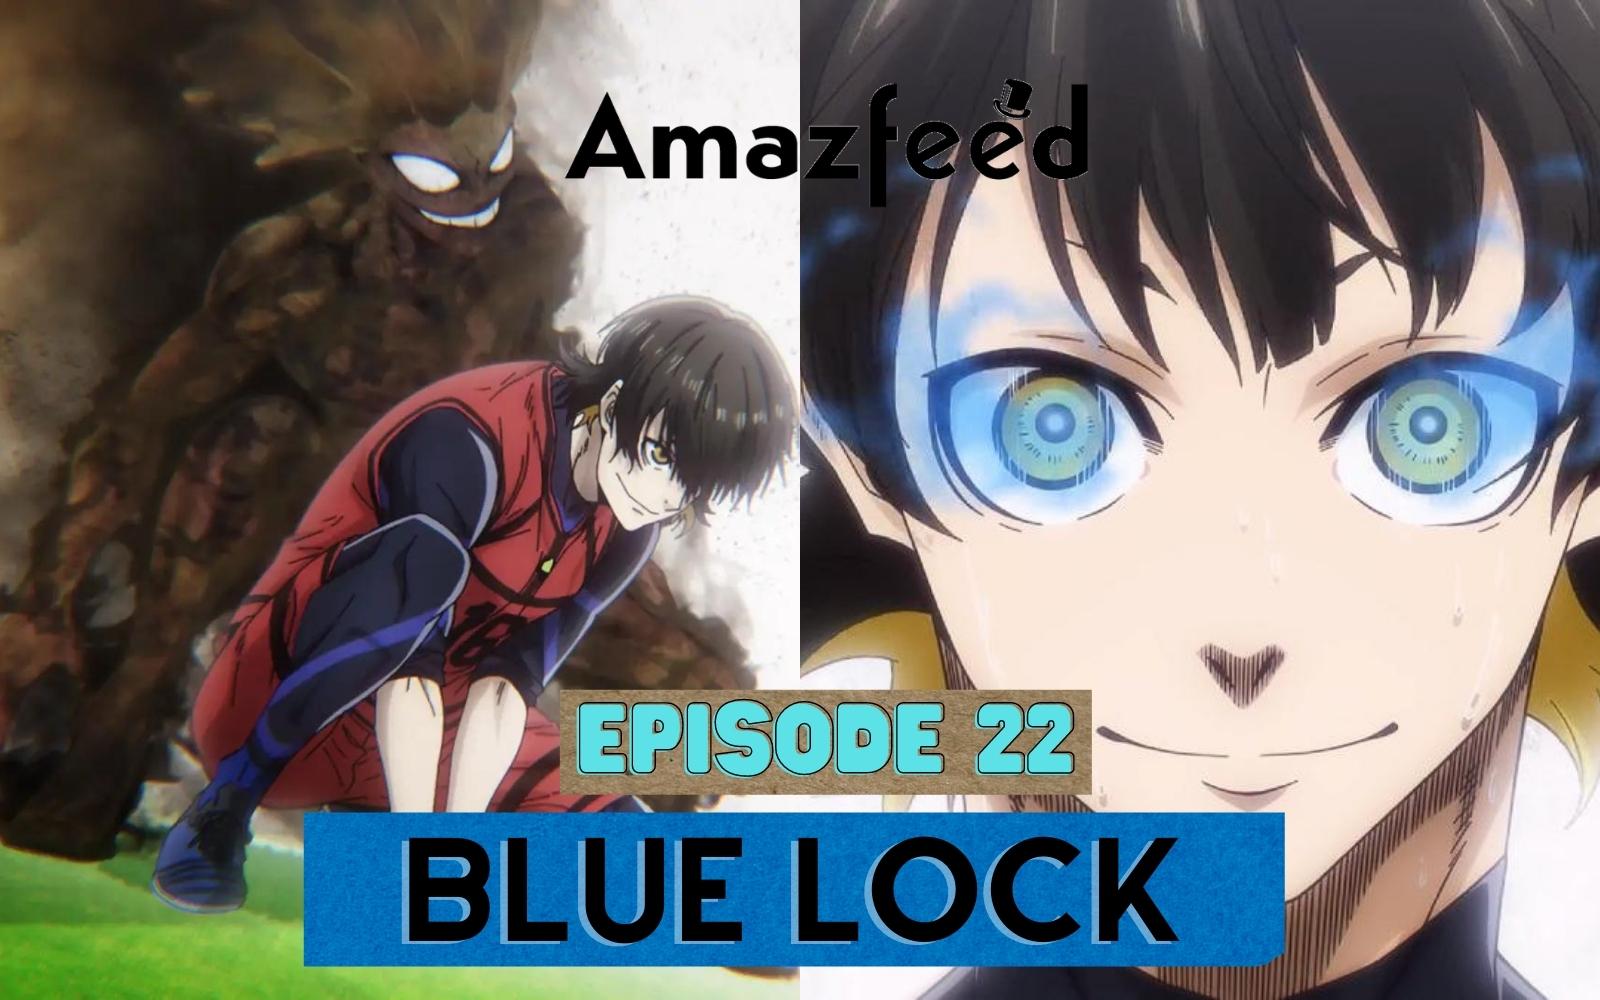 Blue Lock Episode 22 Release Date & Time